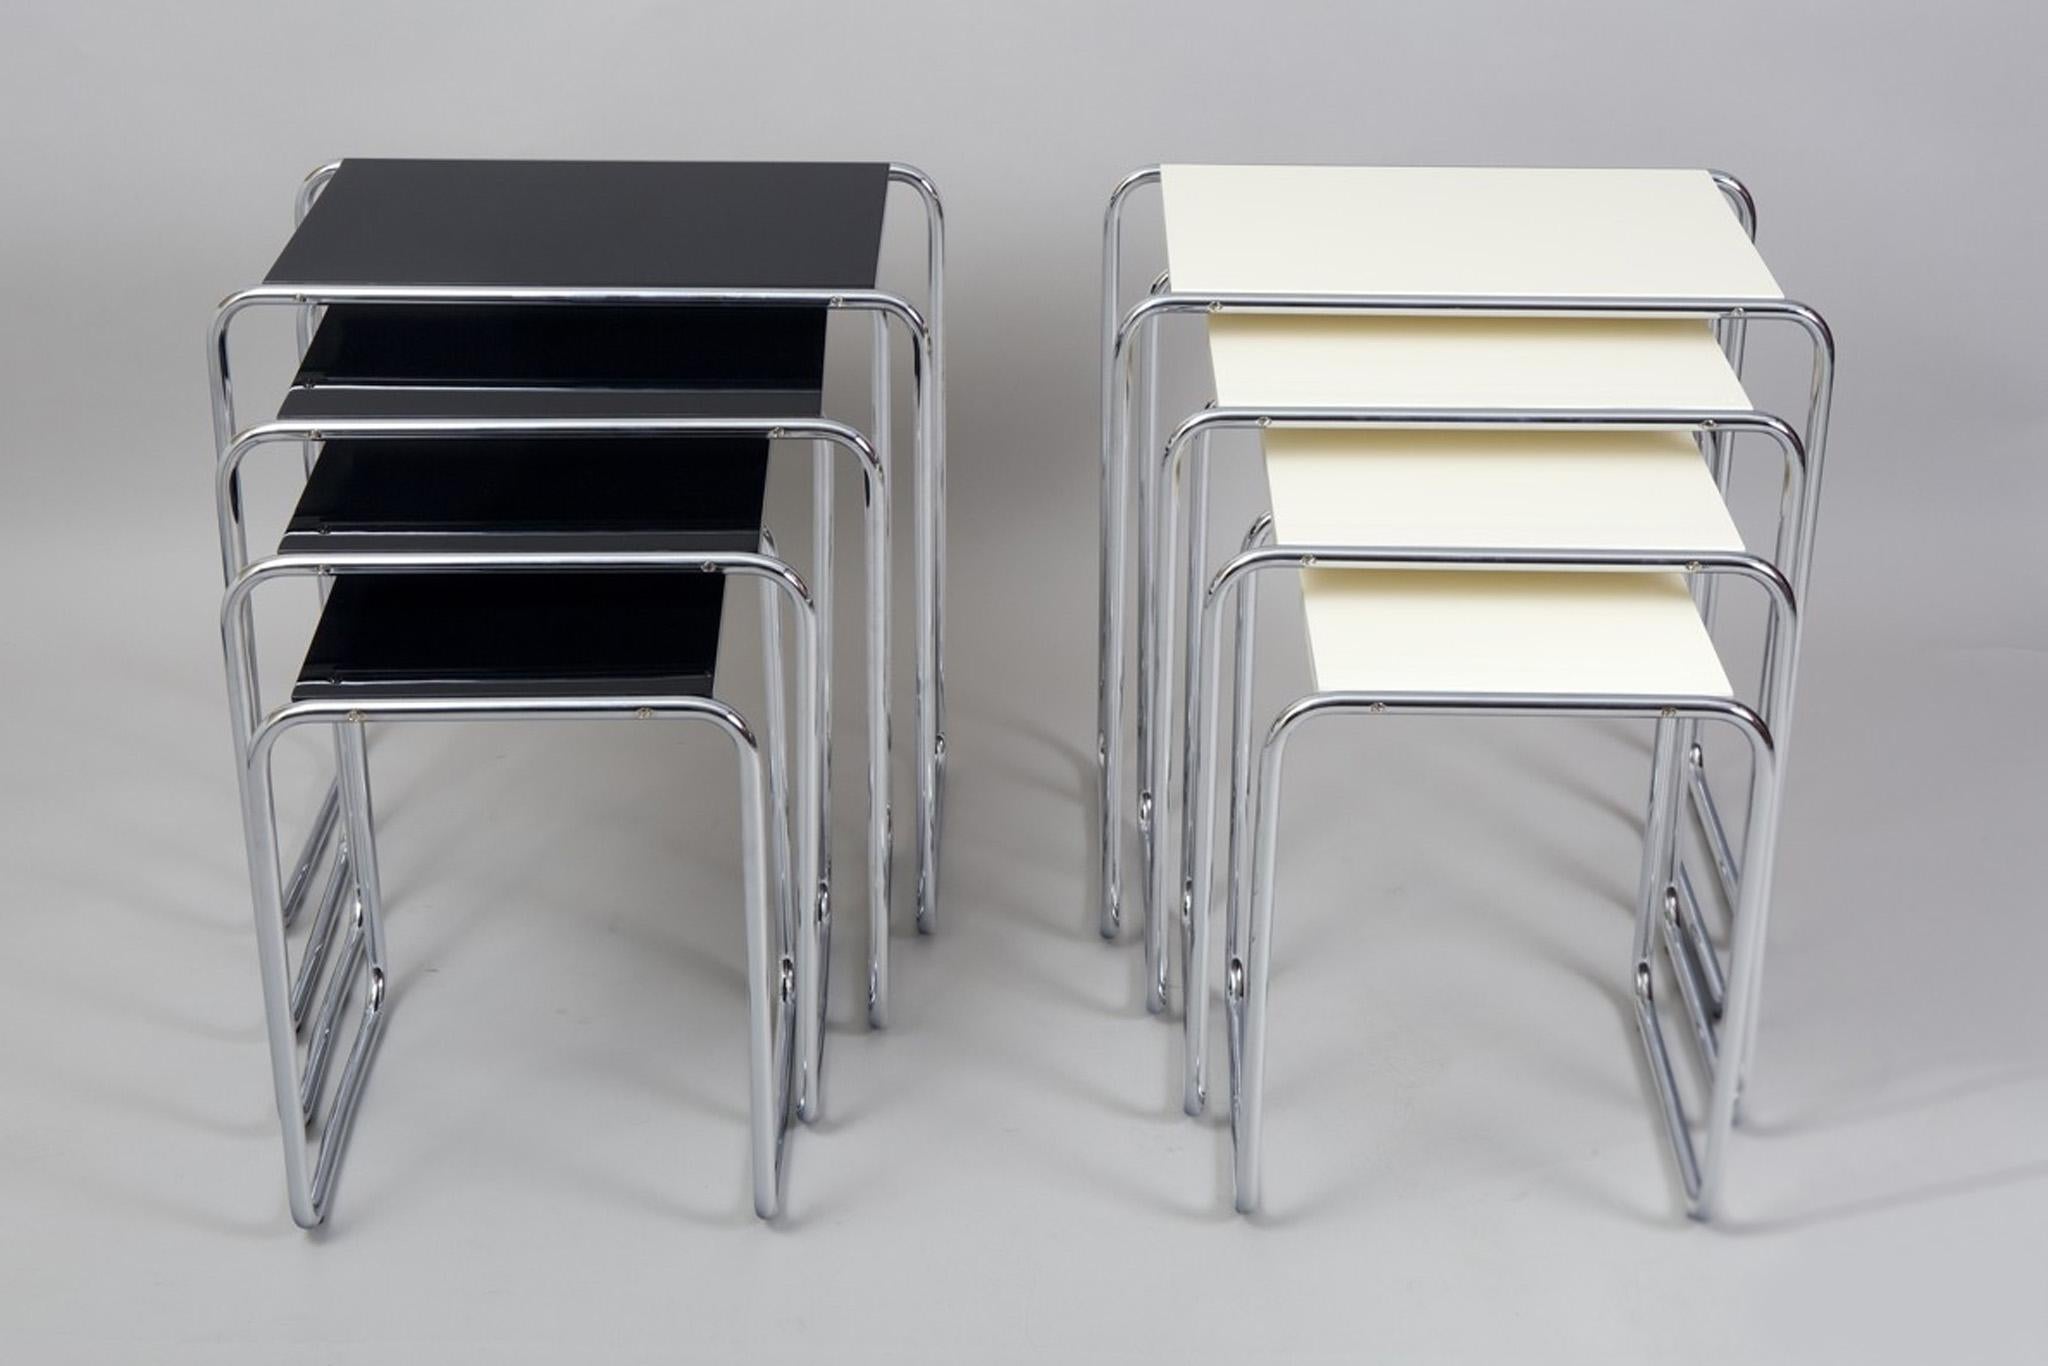 Steel Fully Restored White Nest Tables Made in the 1950s by Kovona, Czech Origin For Sale